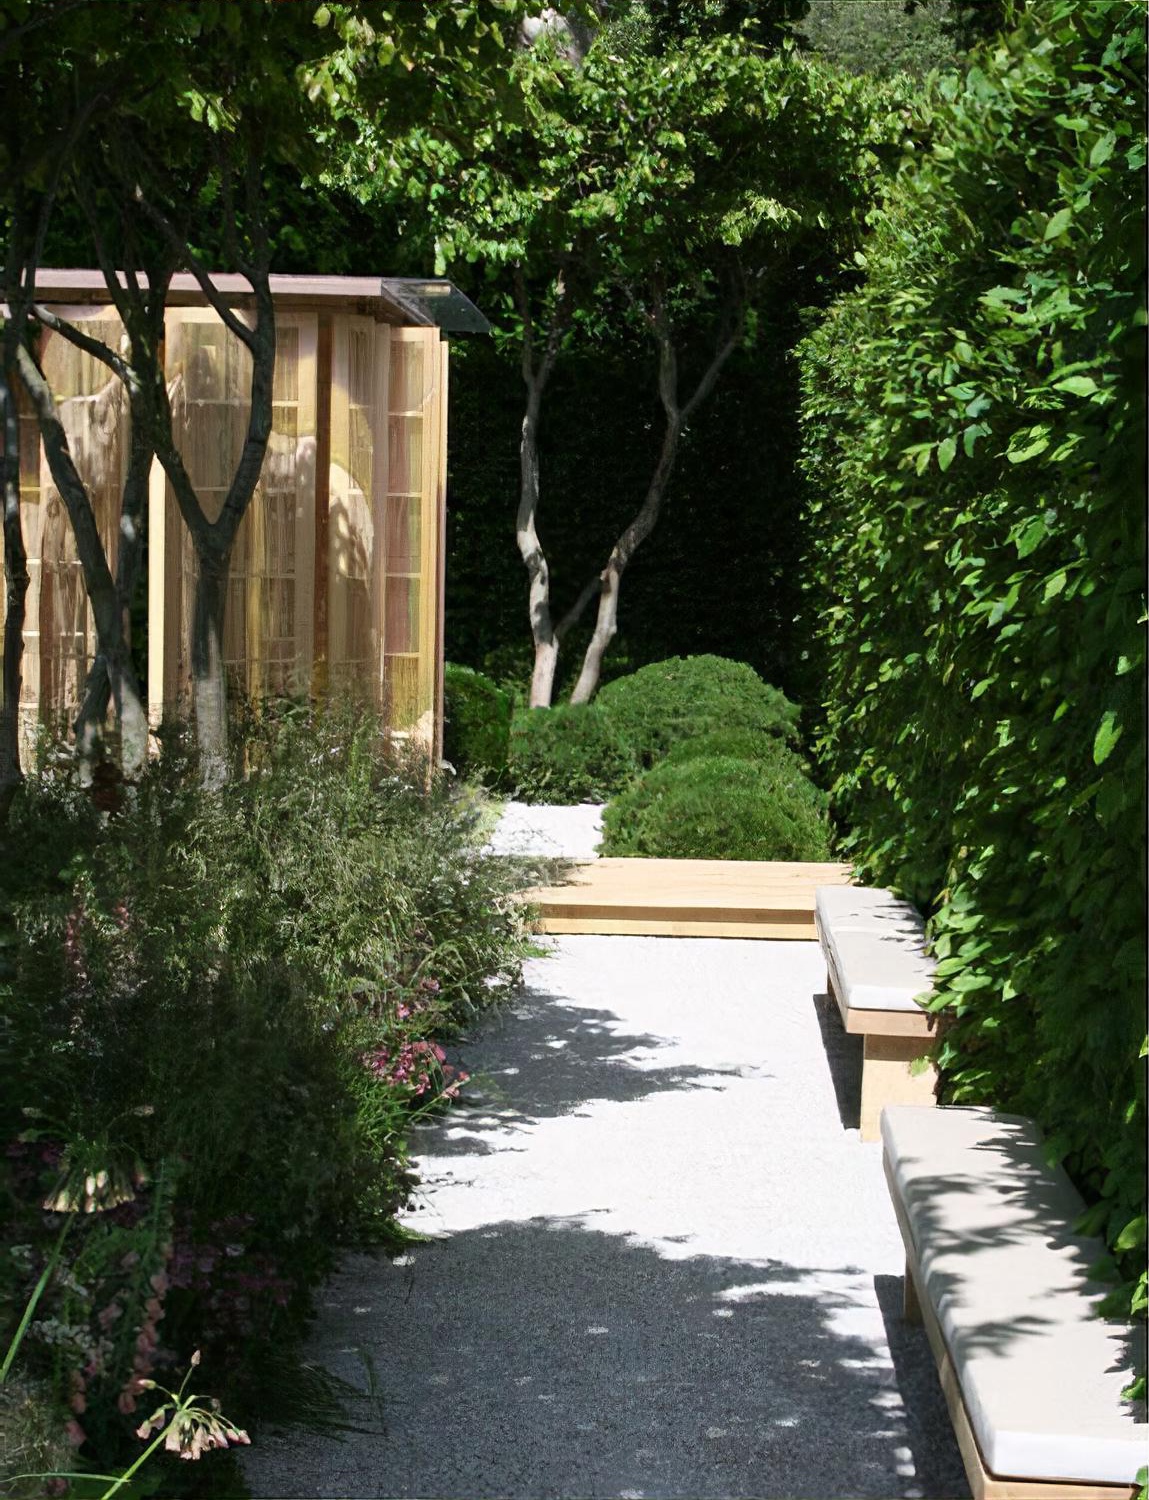 The Laurent Perrier Garden Nature and Human Intervention by garden designer Luciano Giubbilei Chelsea Flower Show 2011